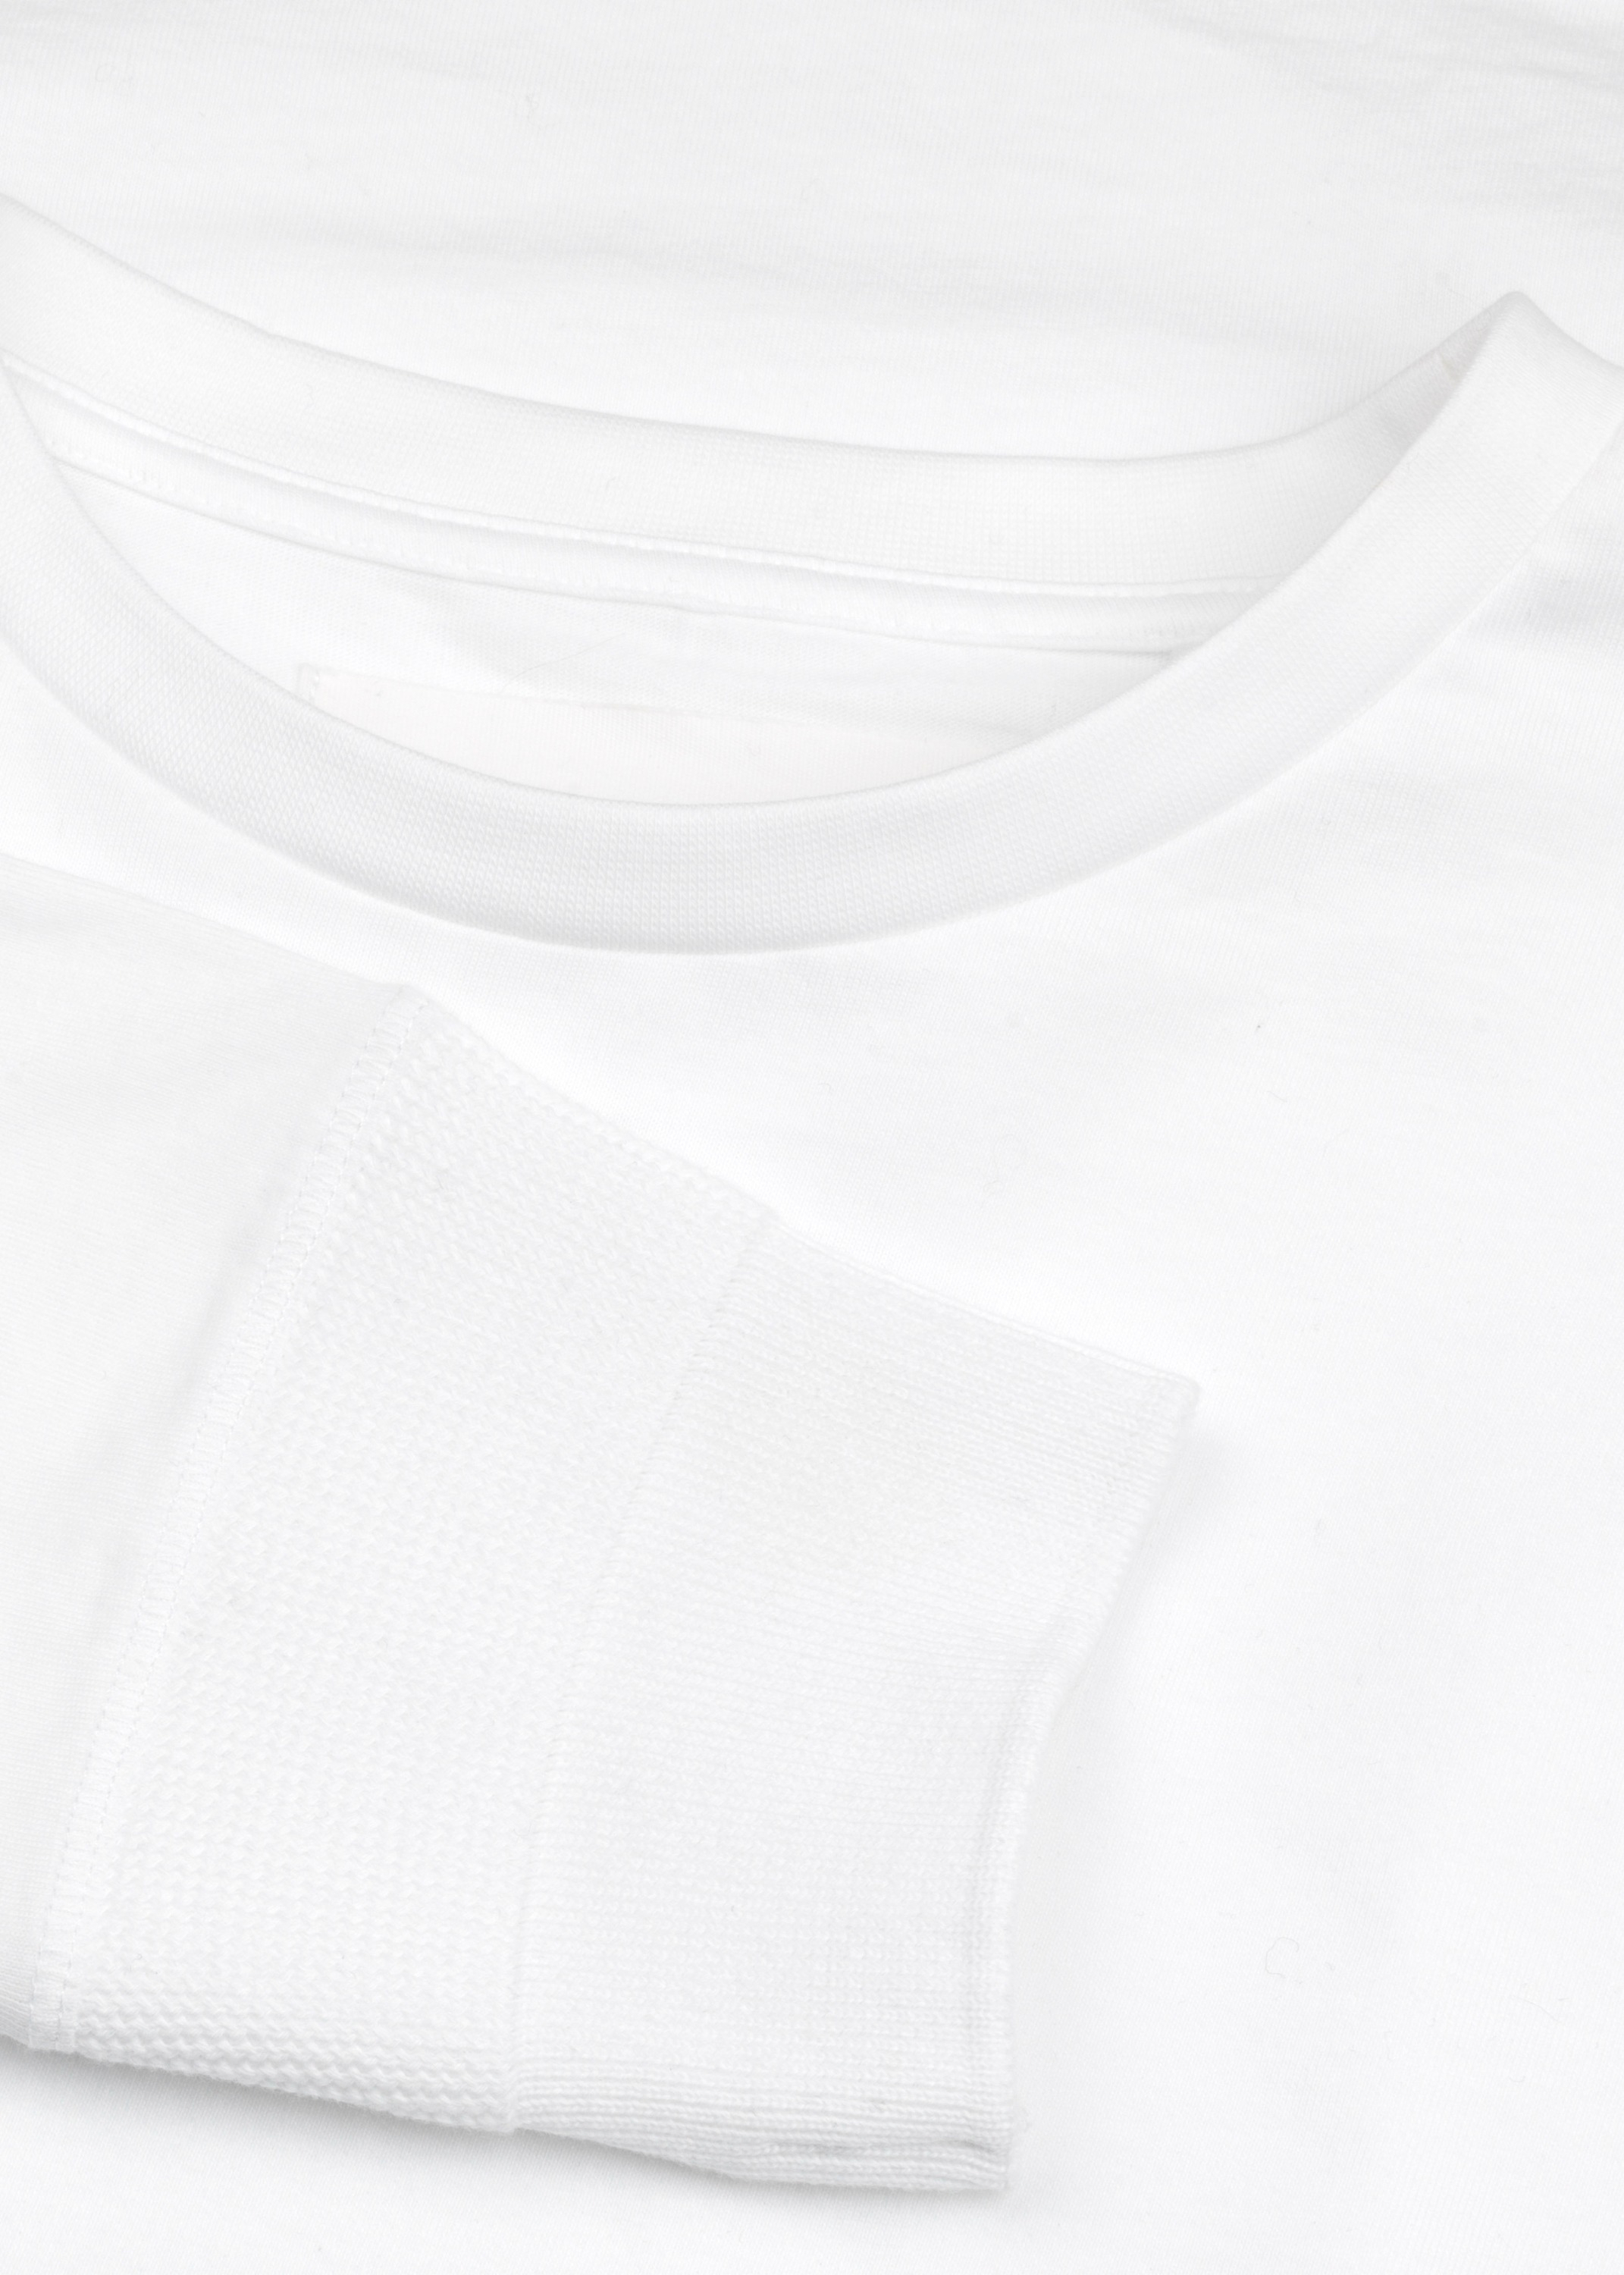 Blusen & T-Shirts - Long Sleeve Tee